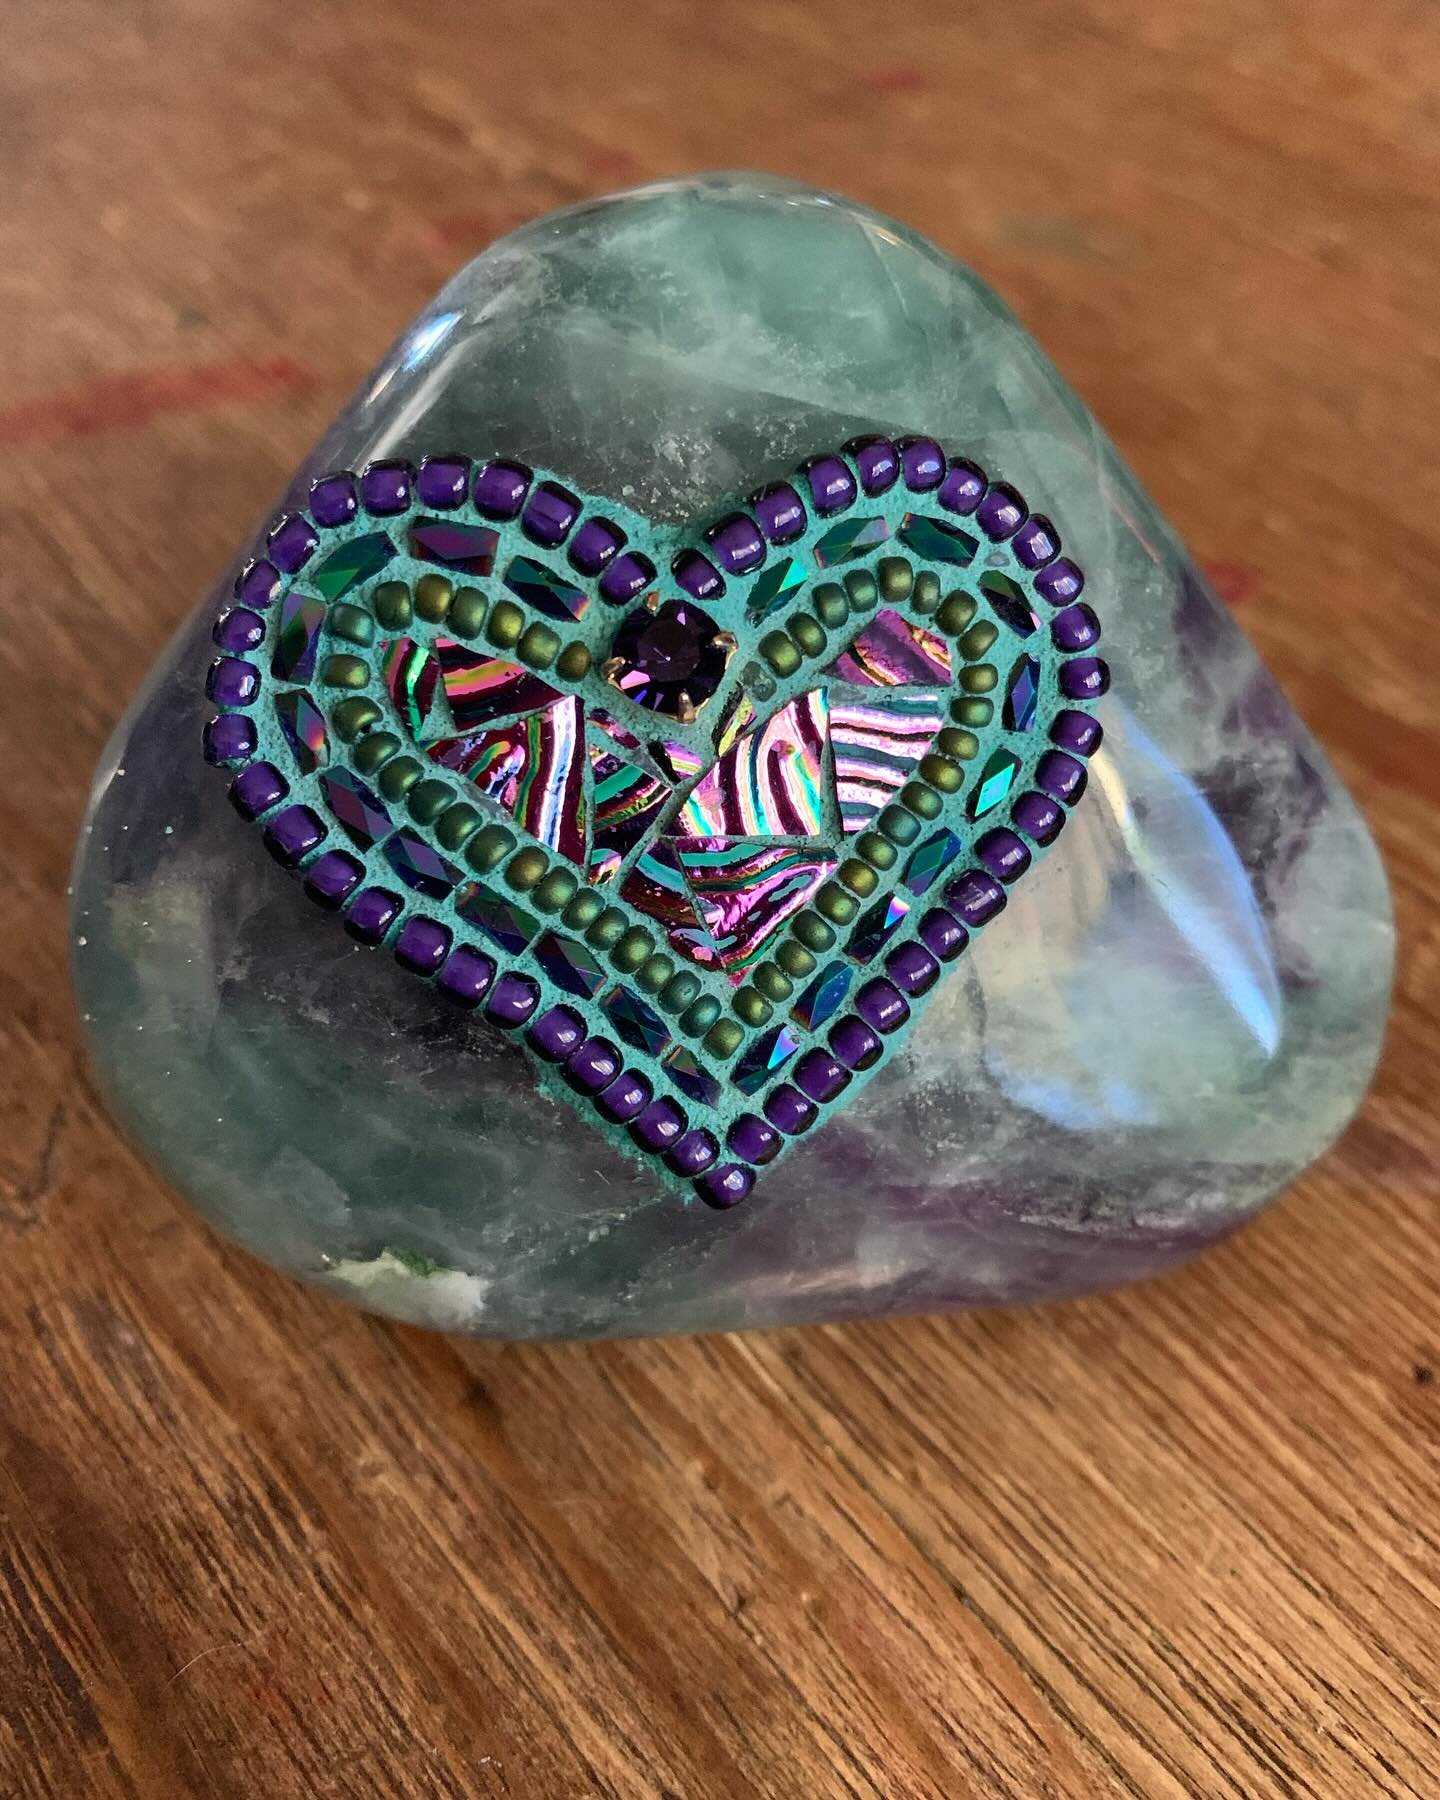 Labradorite stone with mosaic heart #labradorite #mosaicart #mosaicheart #heart #love #iheartyou #giftideas #giftsforher #mindfulness #meditation